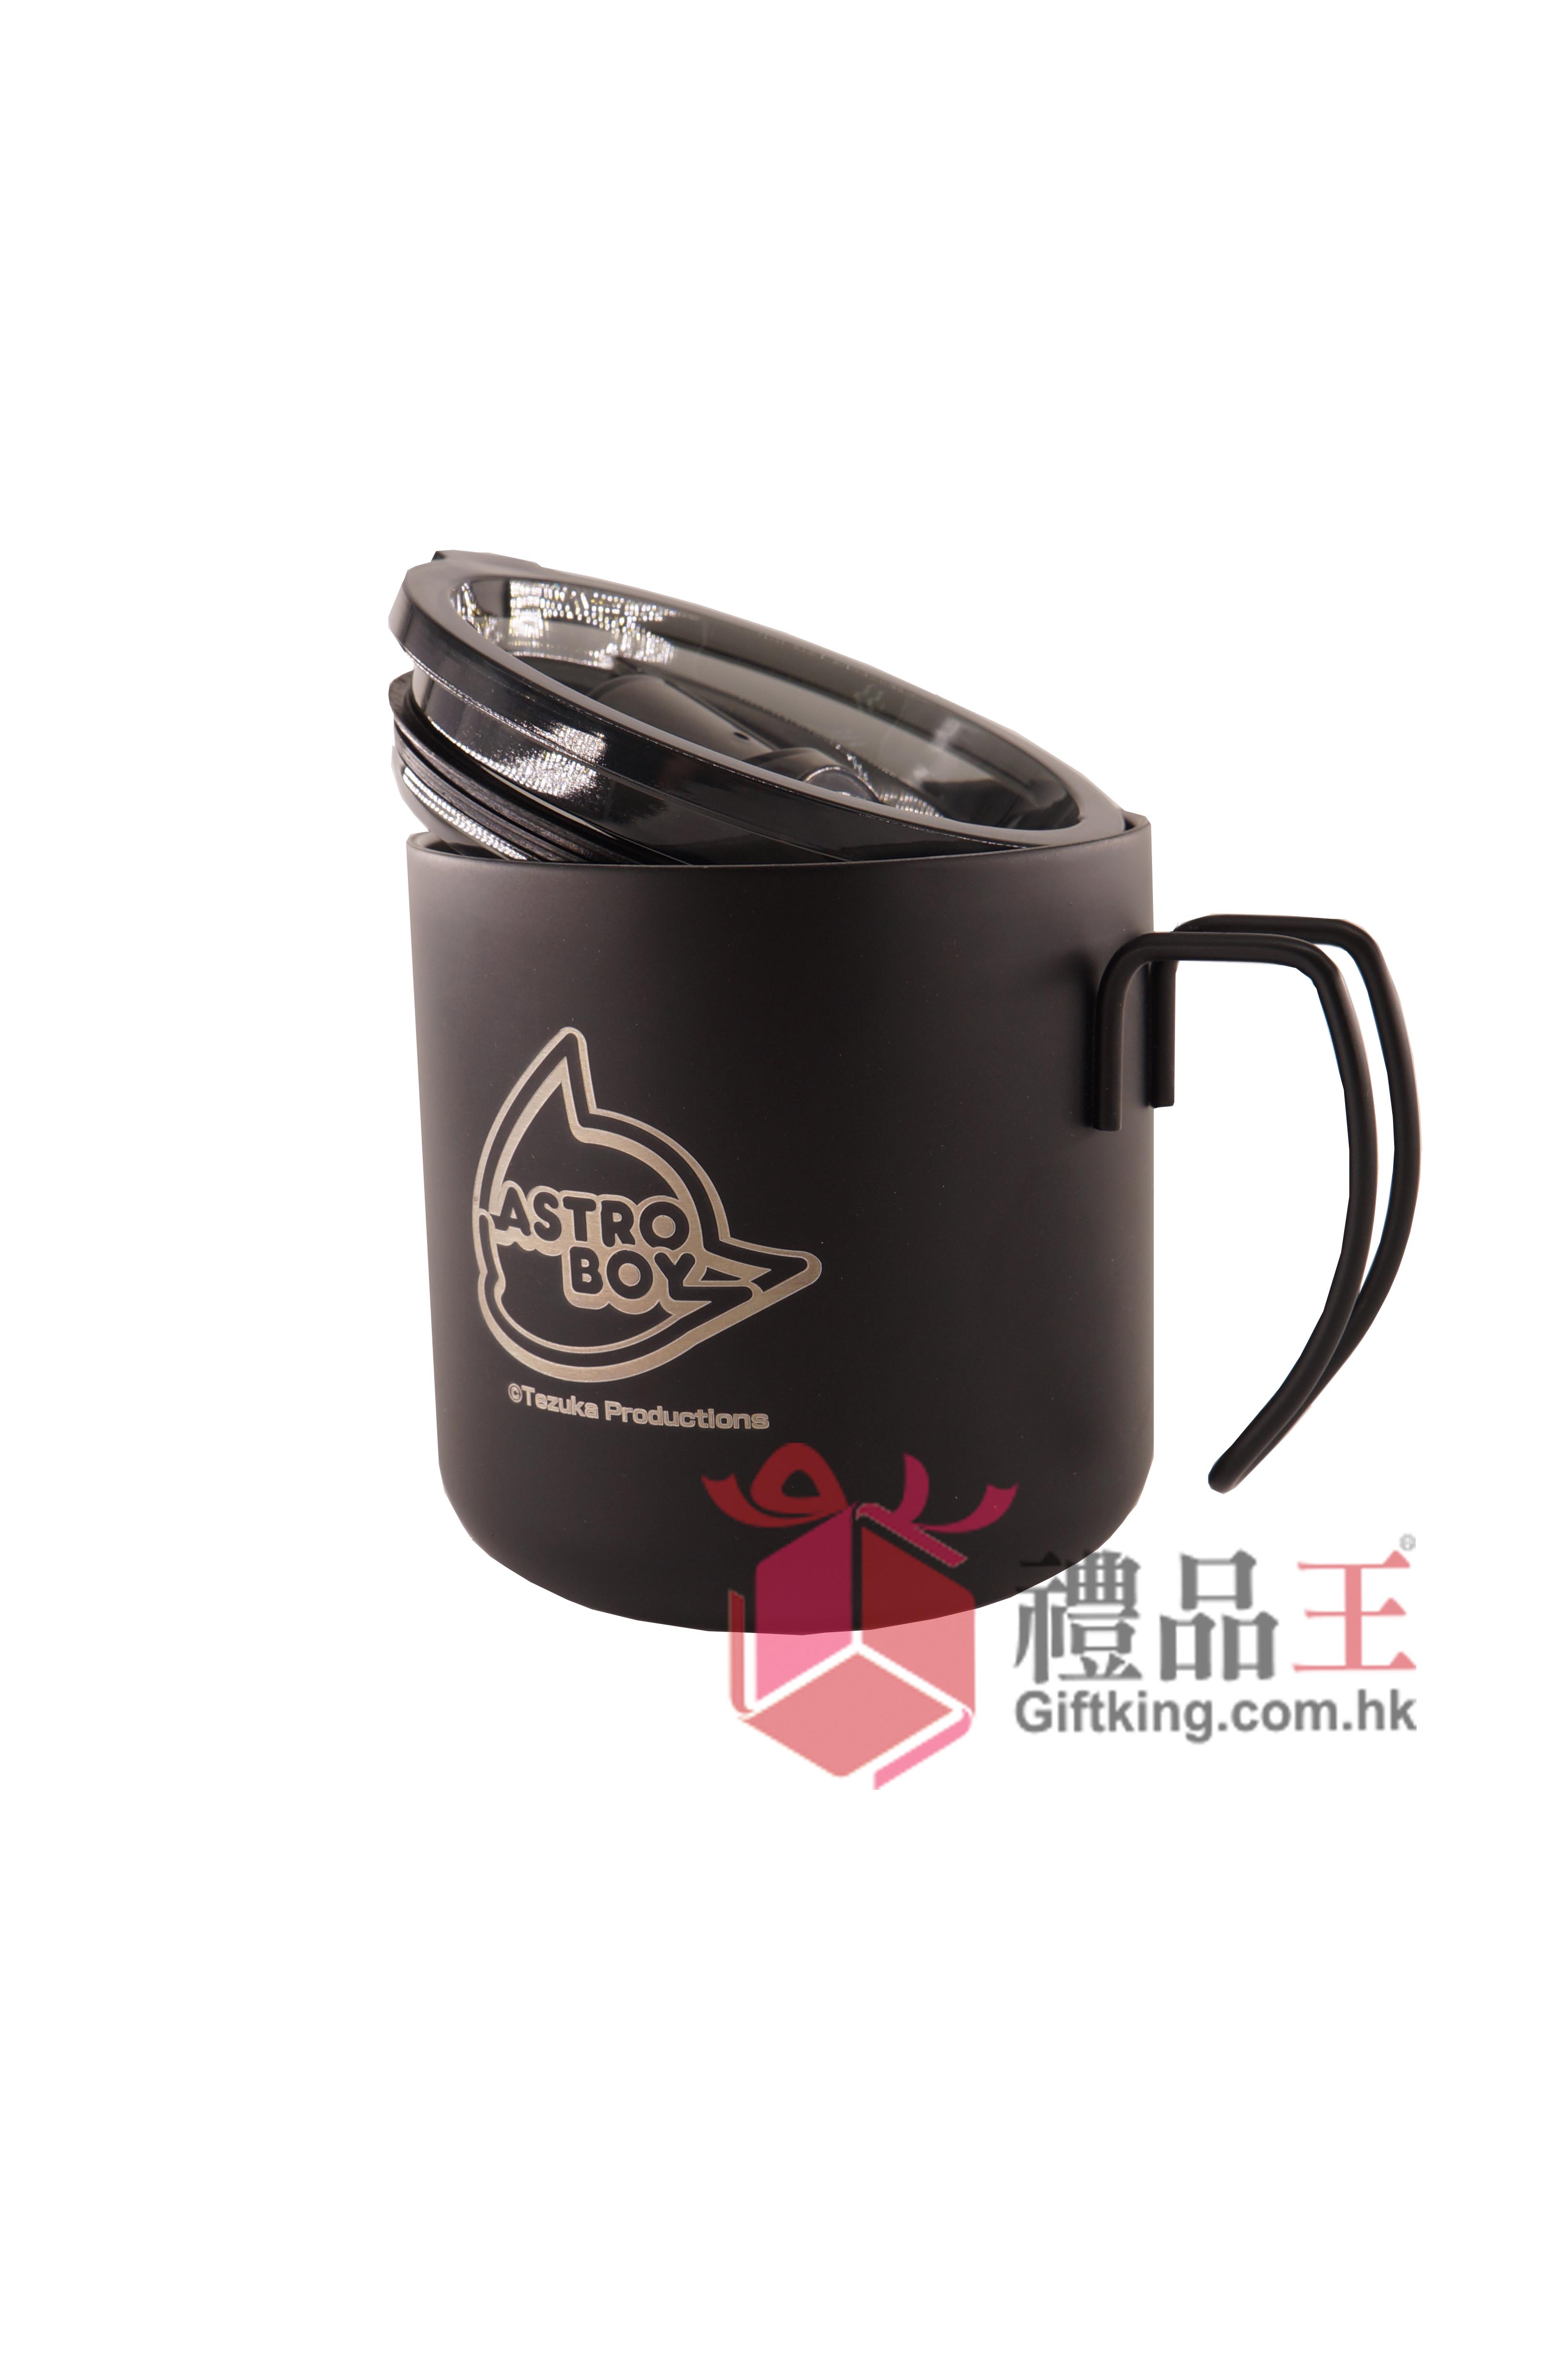 SUNING ASTRO BOY Stainless Steel Coffee Mug With Lid (Homeware Gift)